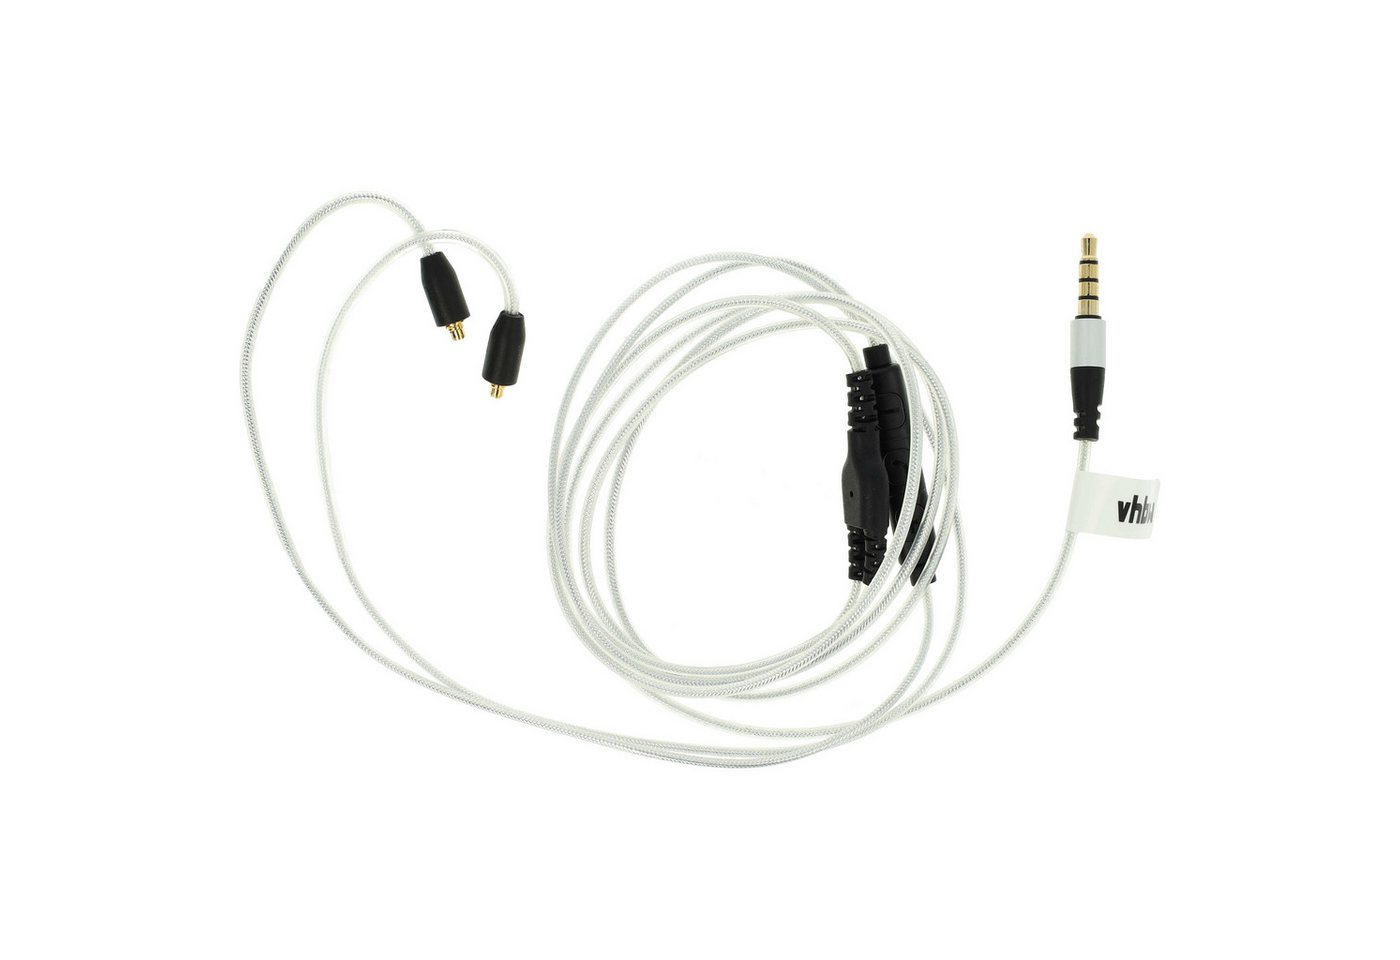 vhbw passend für Logitech Ultimate Ears UE 900 Kopfhörer Audio-Kabel, passend für Logitech Ultimate Ears UE 900 Kopfhörer von vhbw